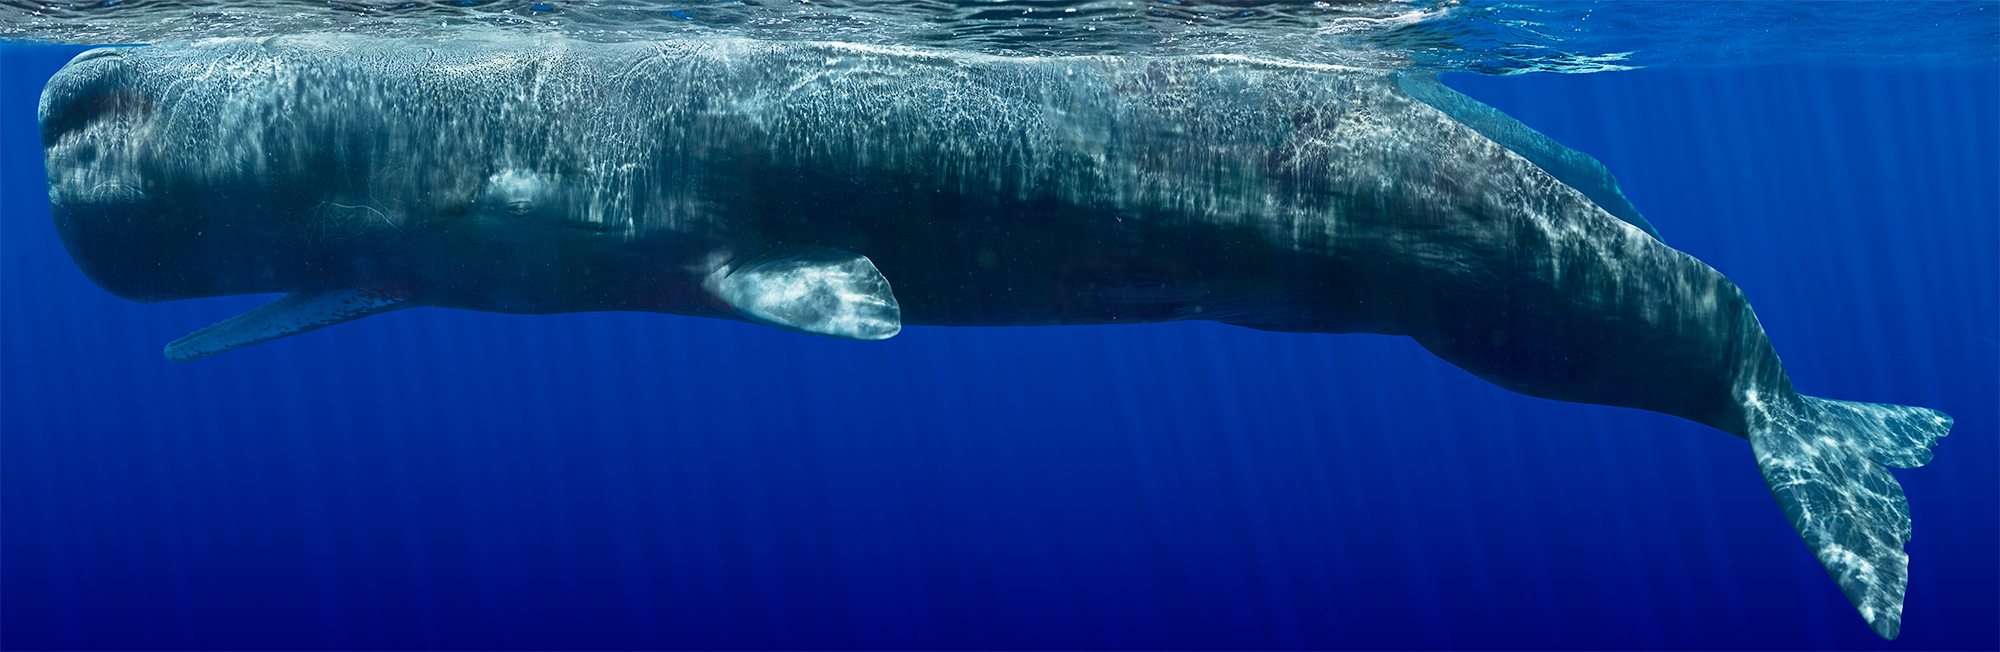 Sperm Whale Composite II, 2011